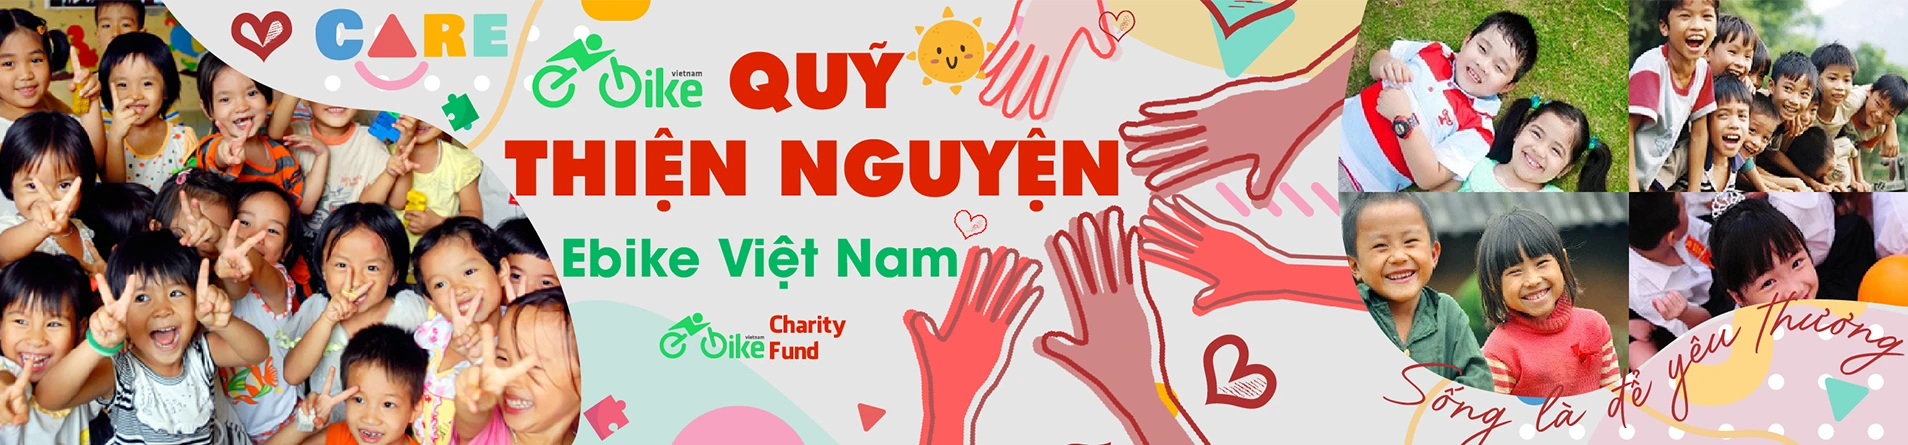 Quy Thien Nguyen Ebike Viet Nam Charity Fund Ebikevn